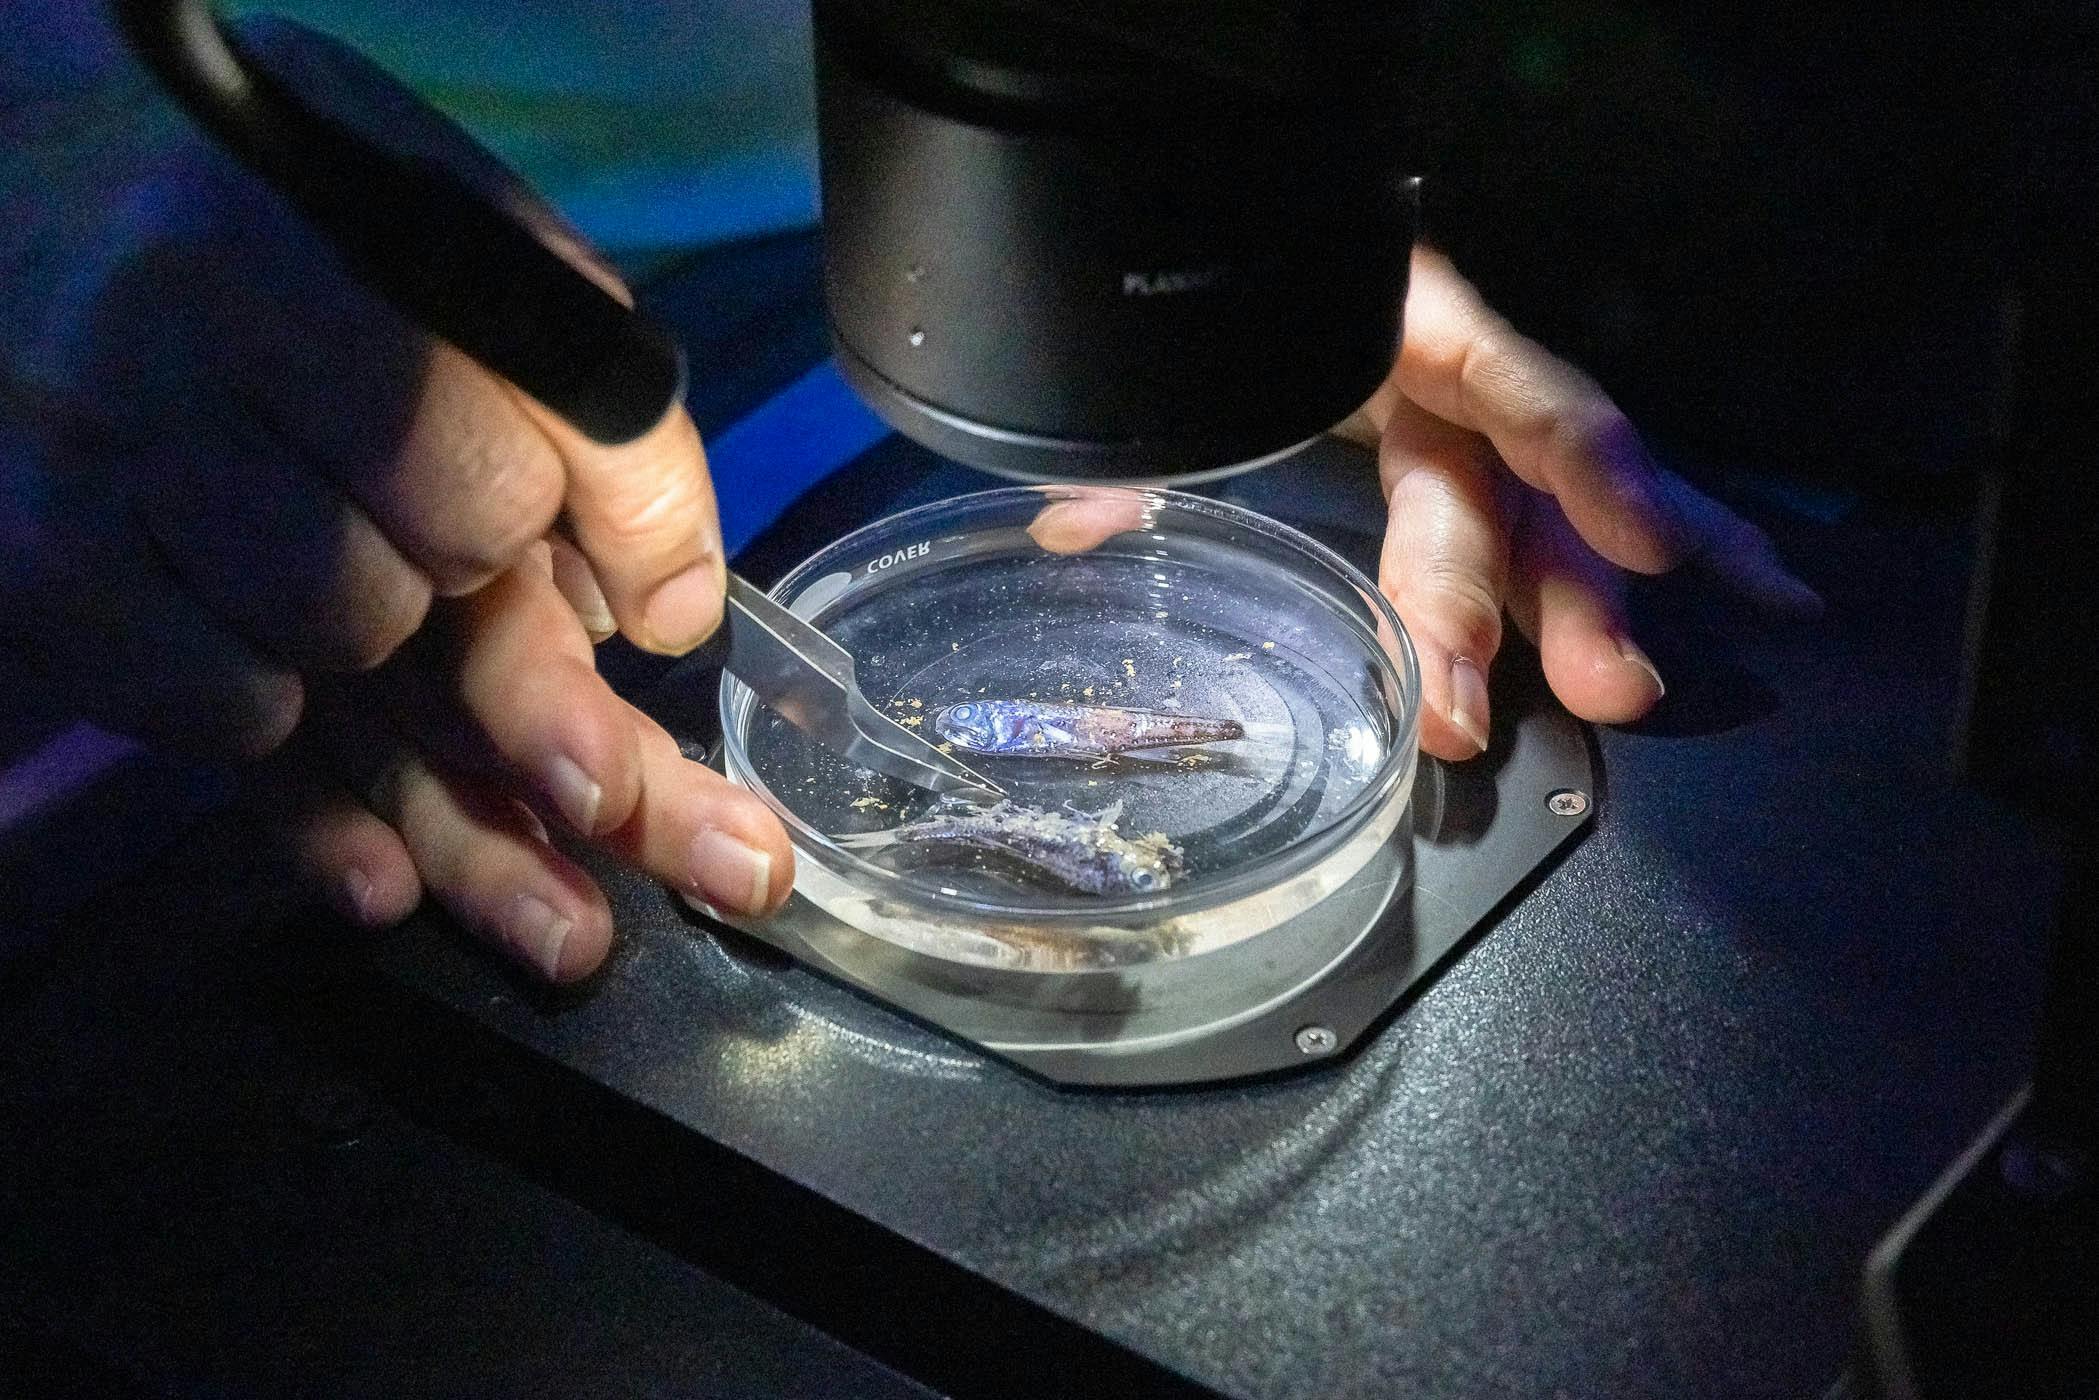 Lanternfish in a petri dish